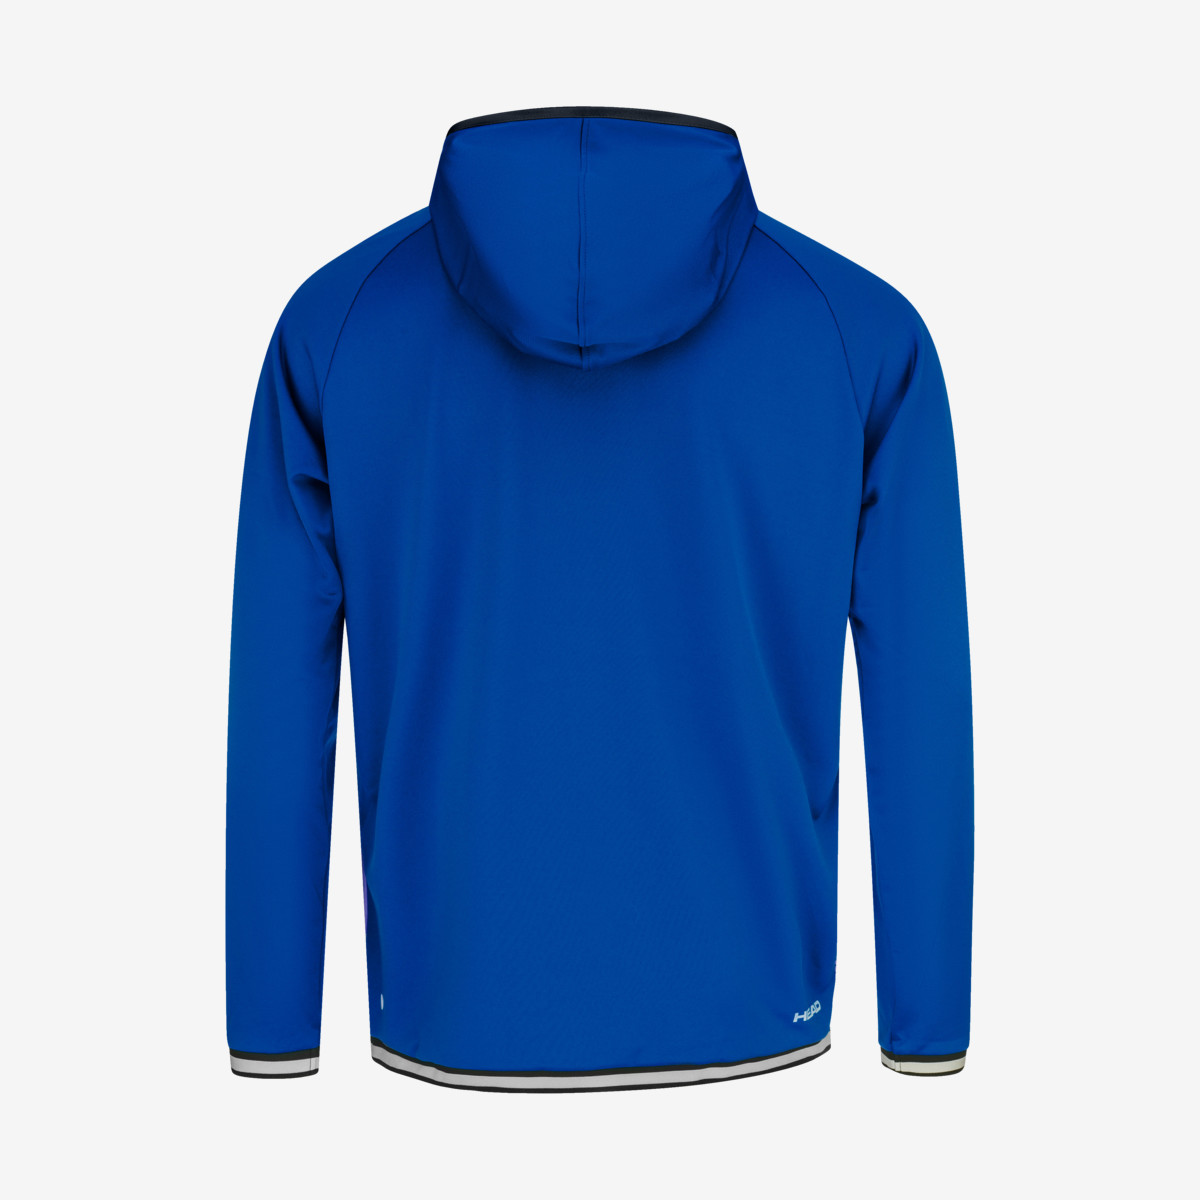 topspin-hoodie-boys-royal-blue-print-vision-m (1)